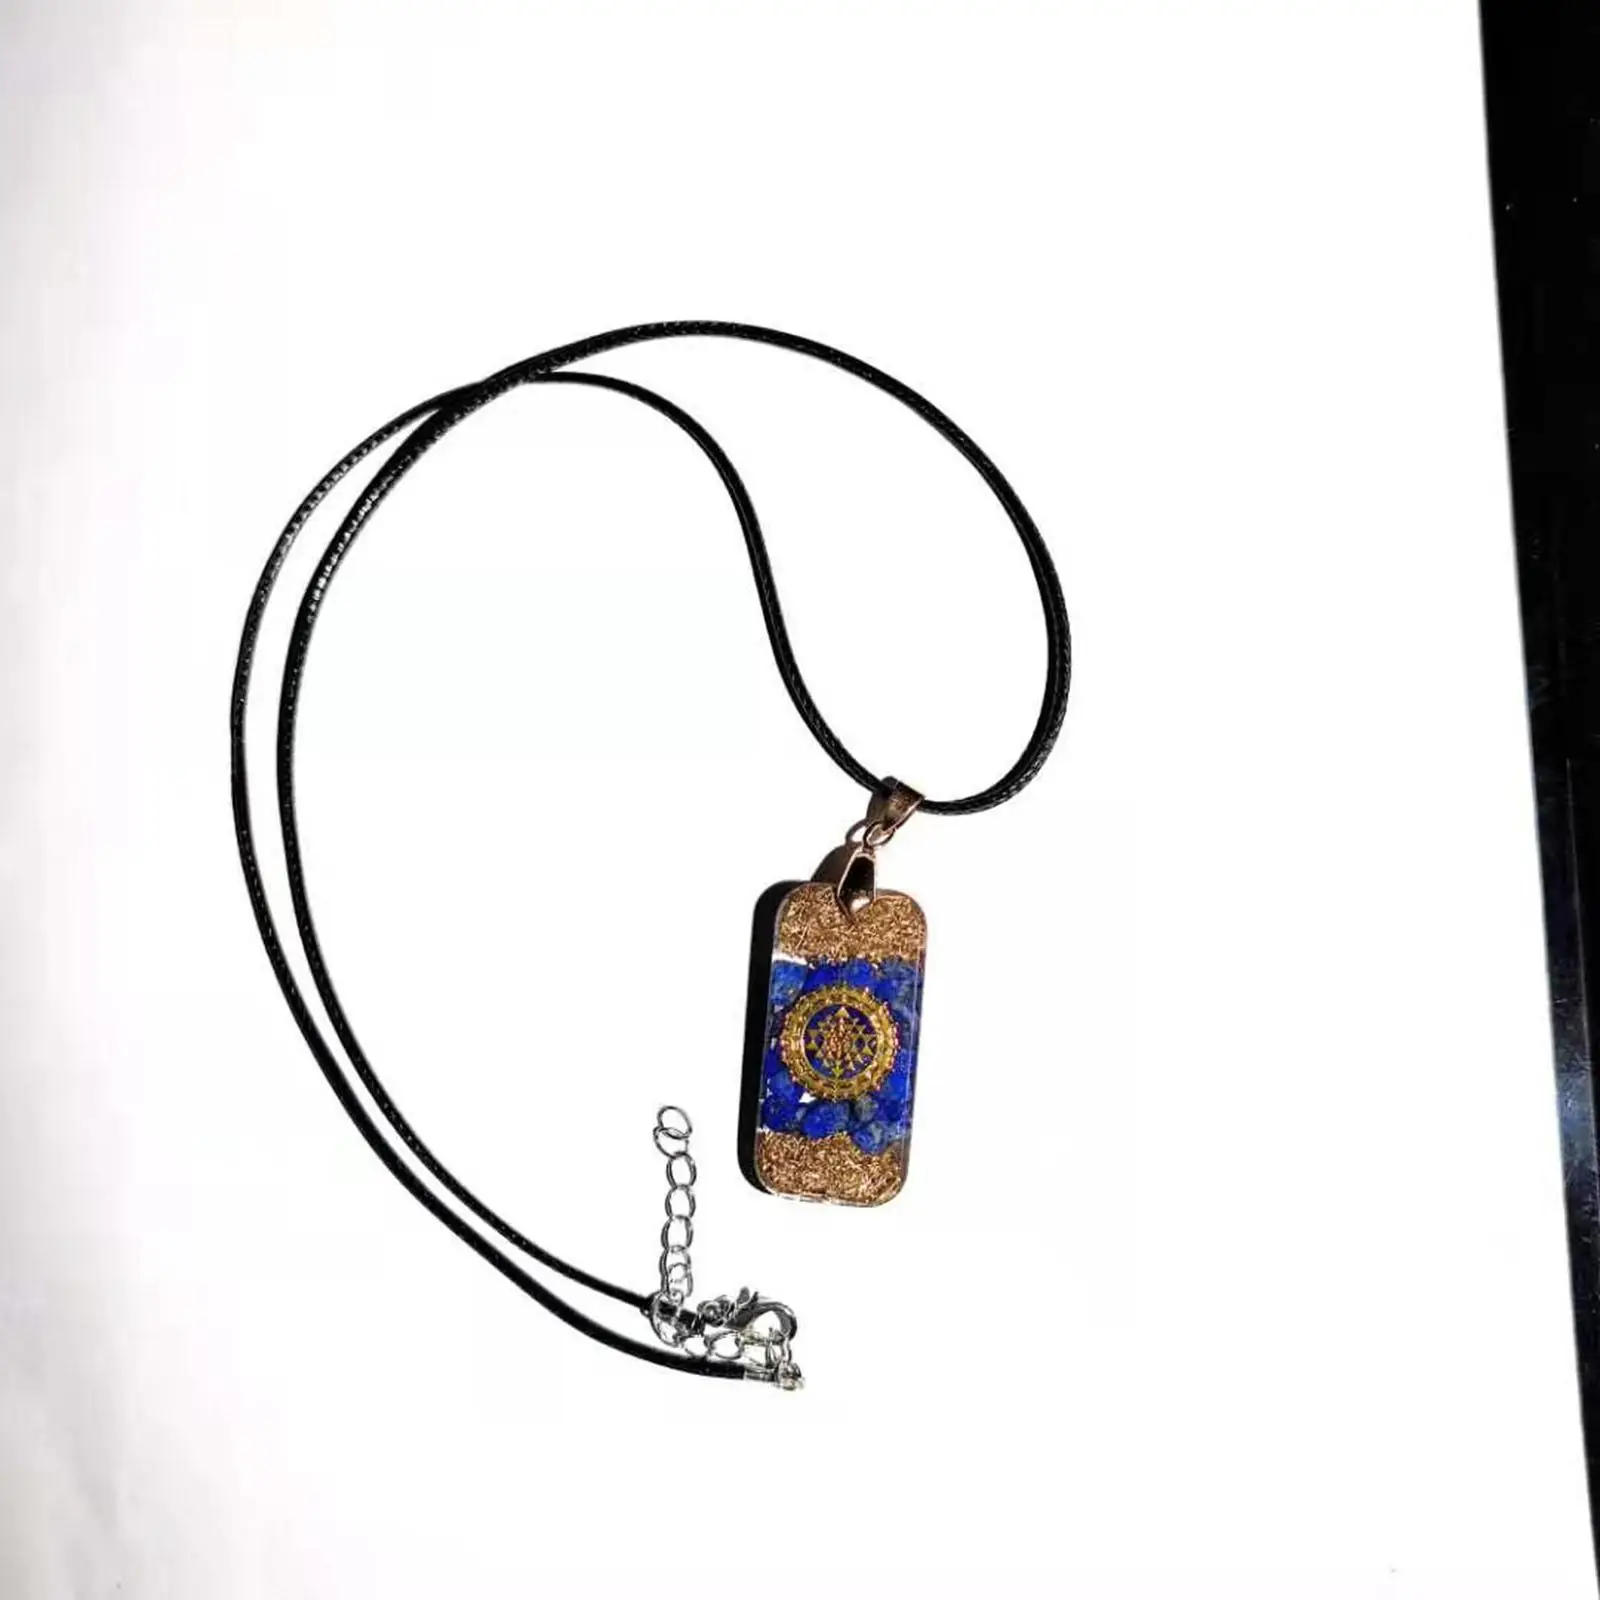 Chakra Pendant Necklace, Positive Energy Generator, Relaxing Necklace Purification Pendant, Protection Amulet for Women Men